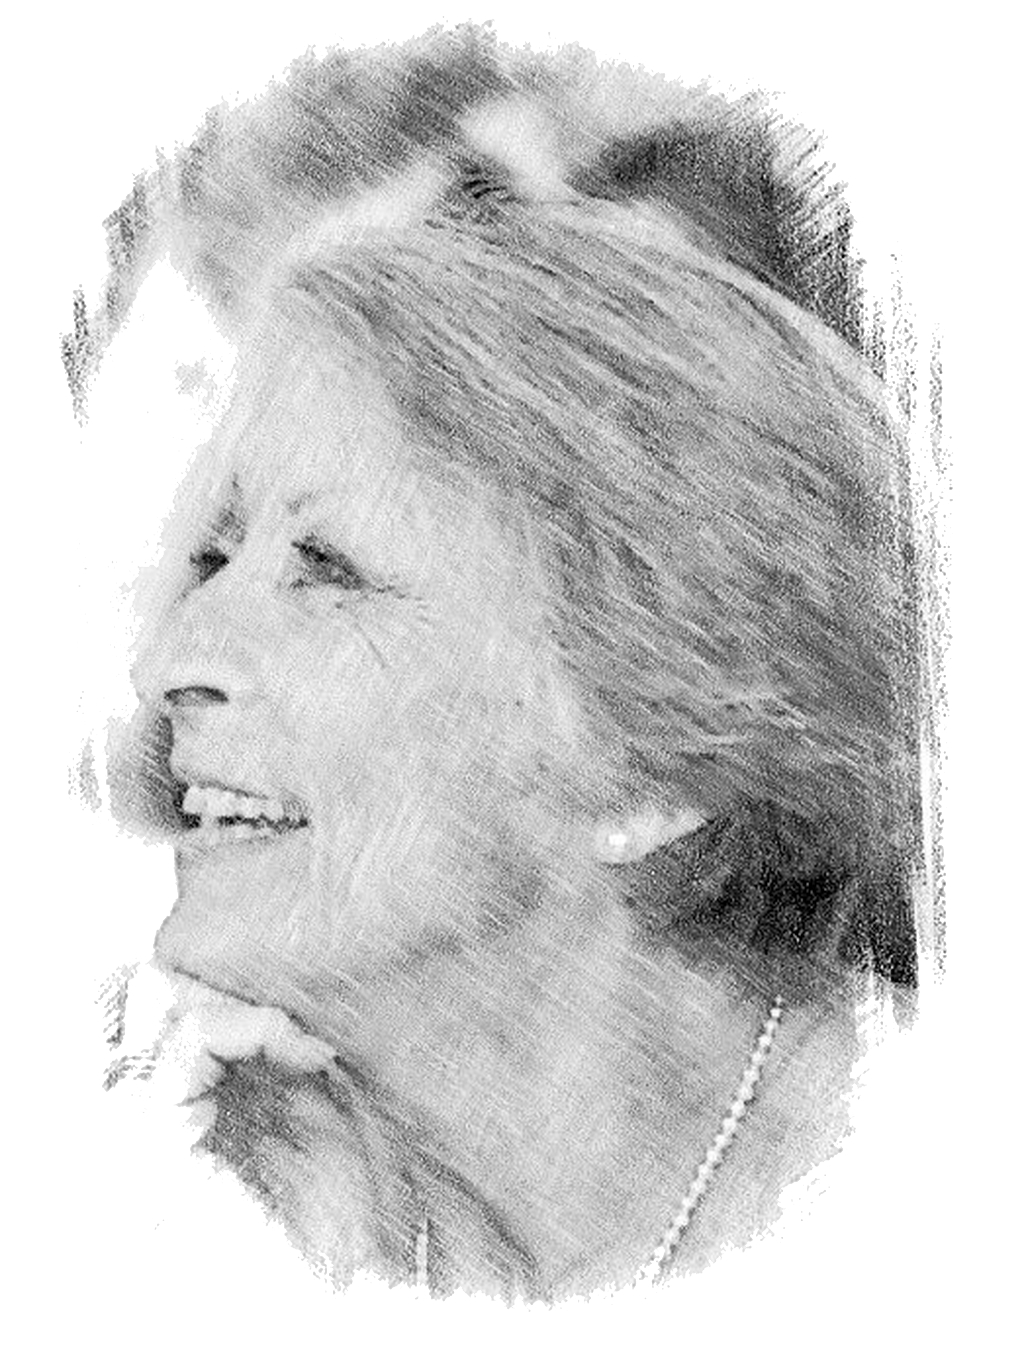 Maureen McCroskie - Composed by John C Grant (https://johncgrant.com). Traditional composer from Kilmarnock, Ayrshire, Scotland.